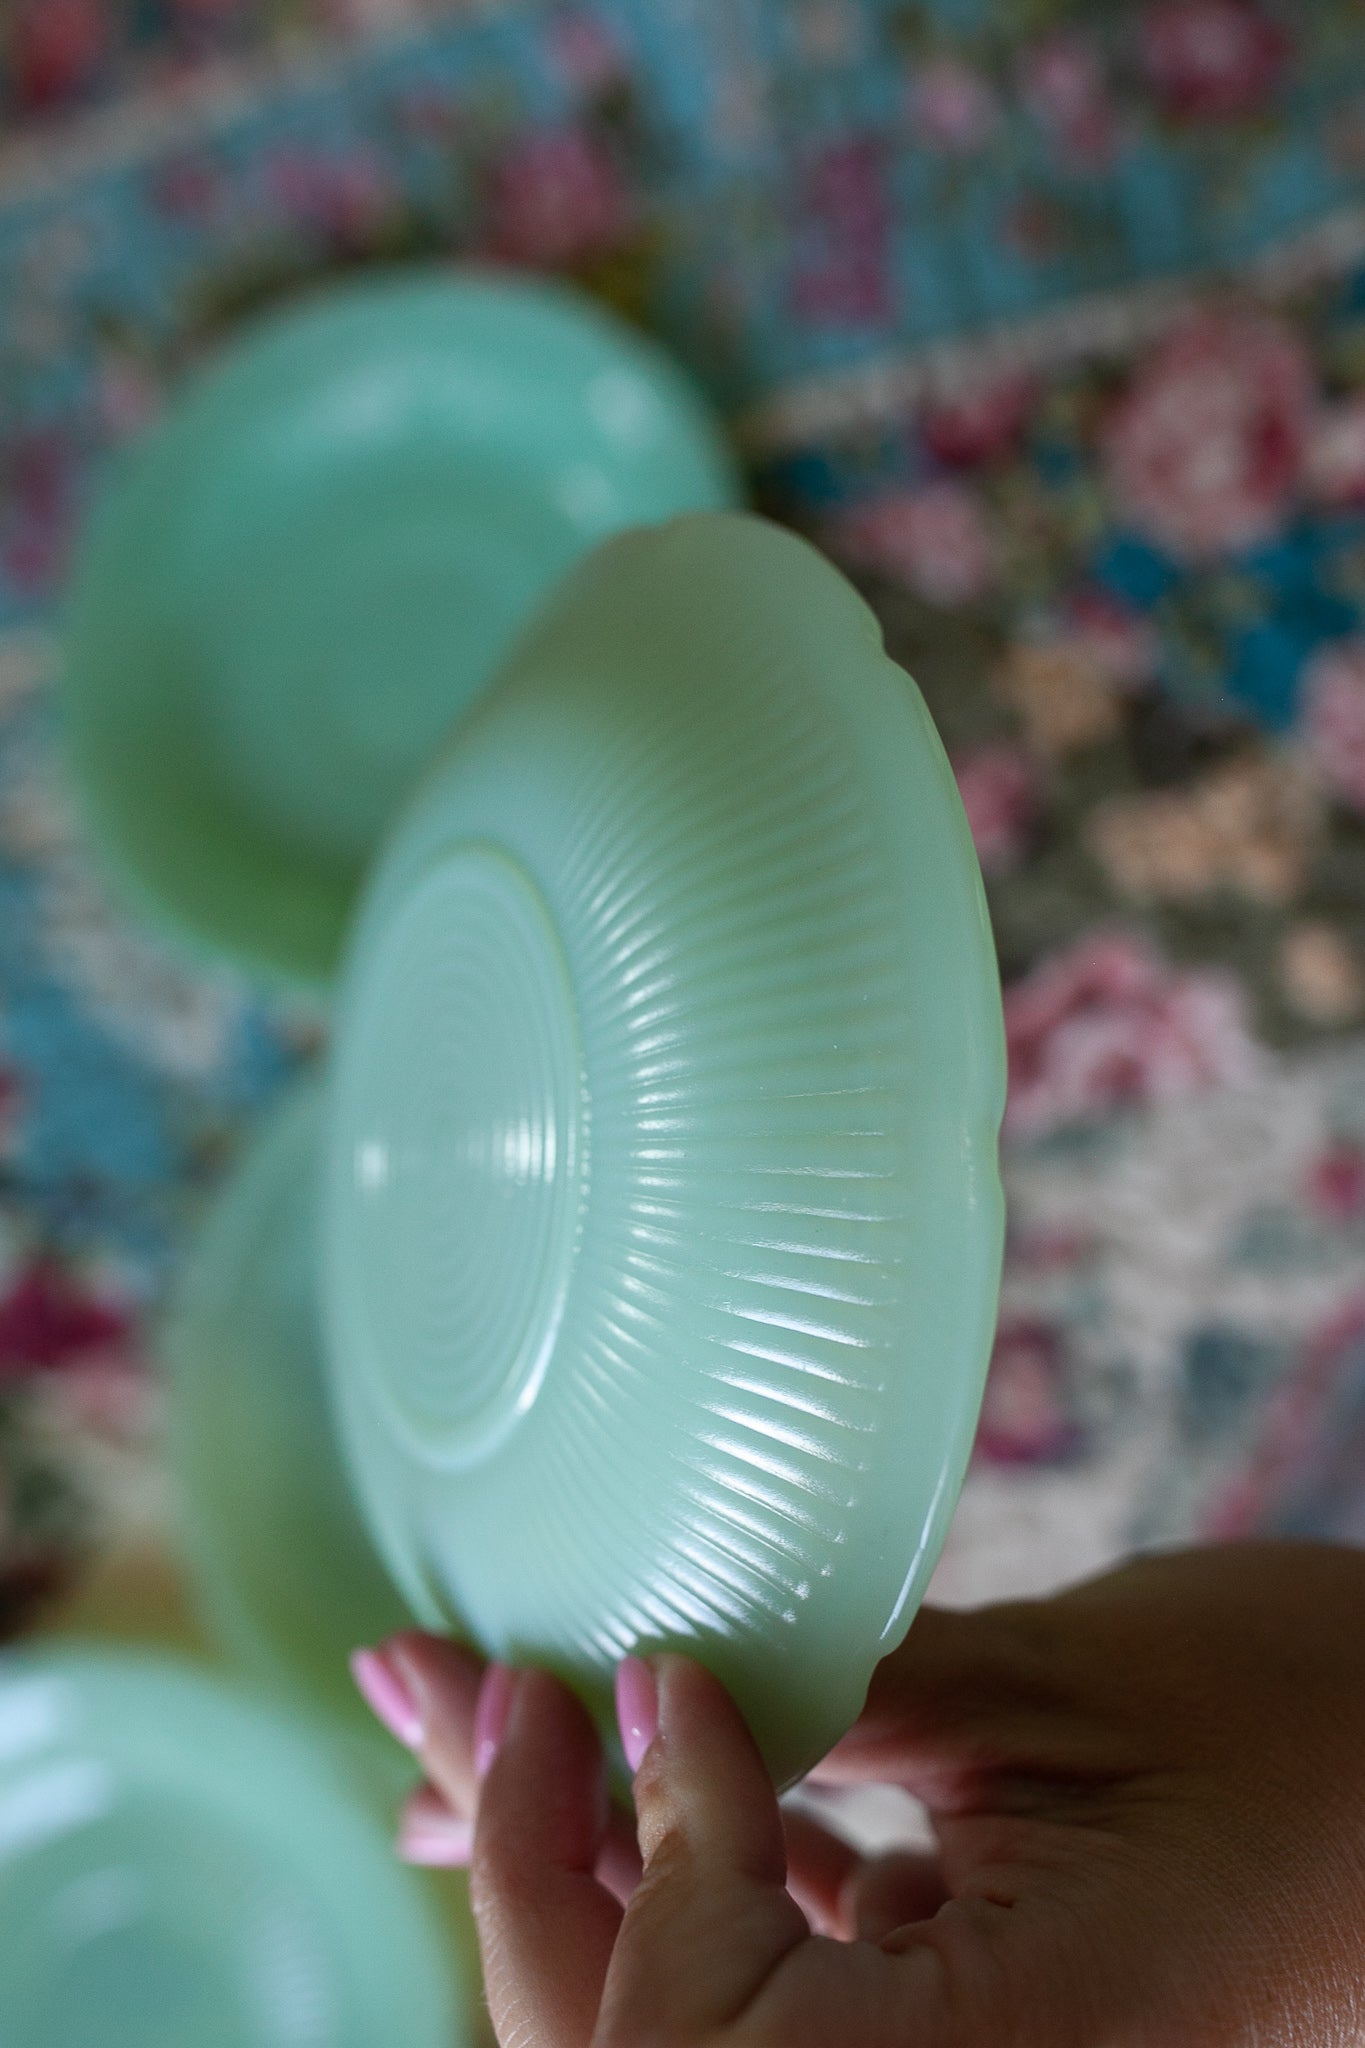 Vintage Jadeite Saucers -Alice Floral Pattern Mid century scalloped edge 6" saucers